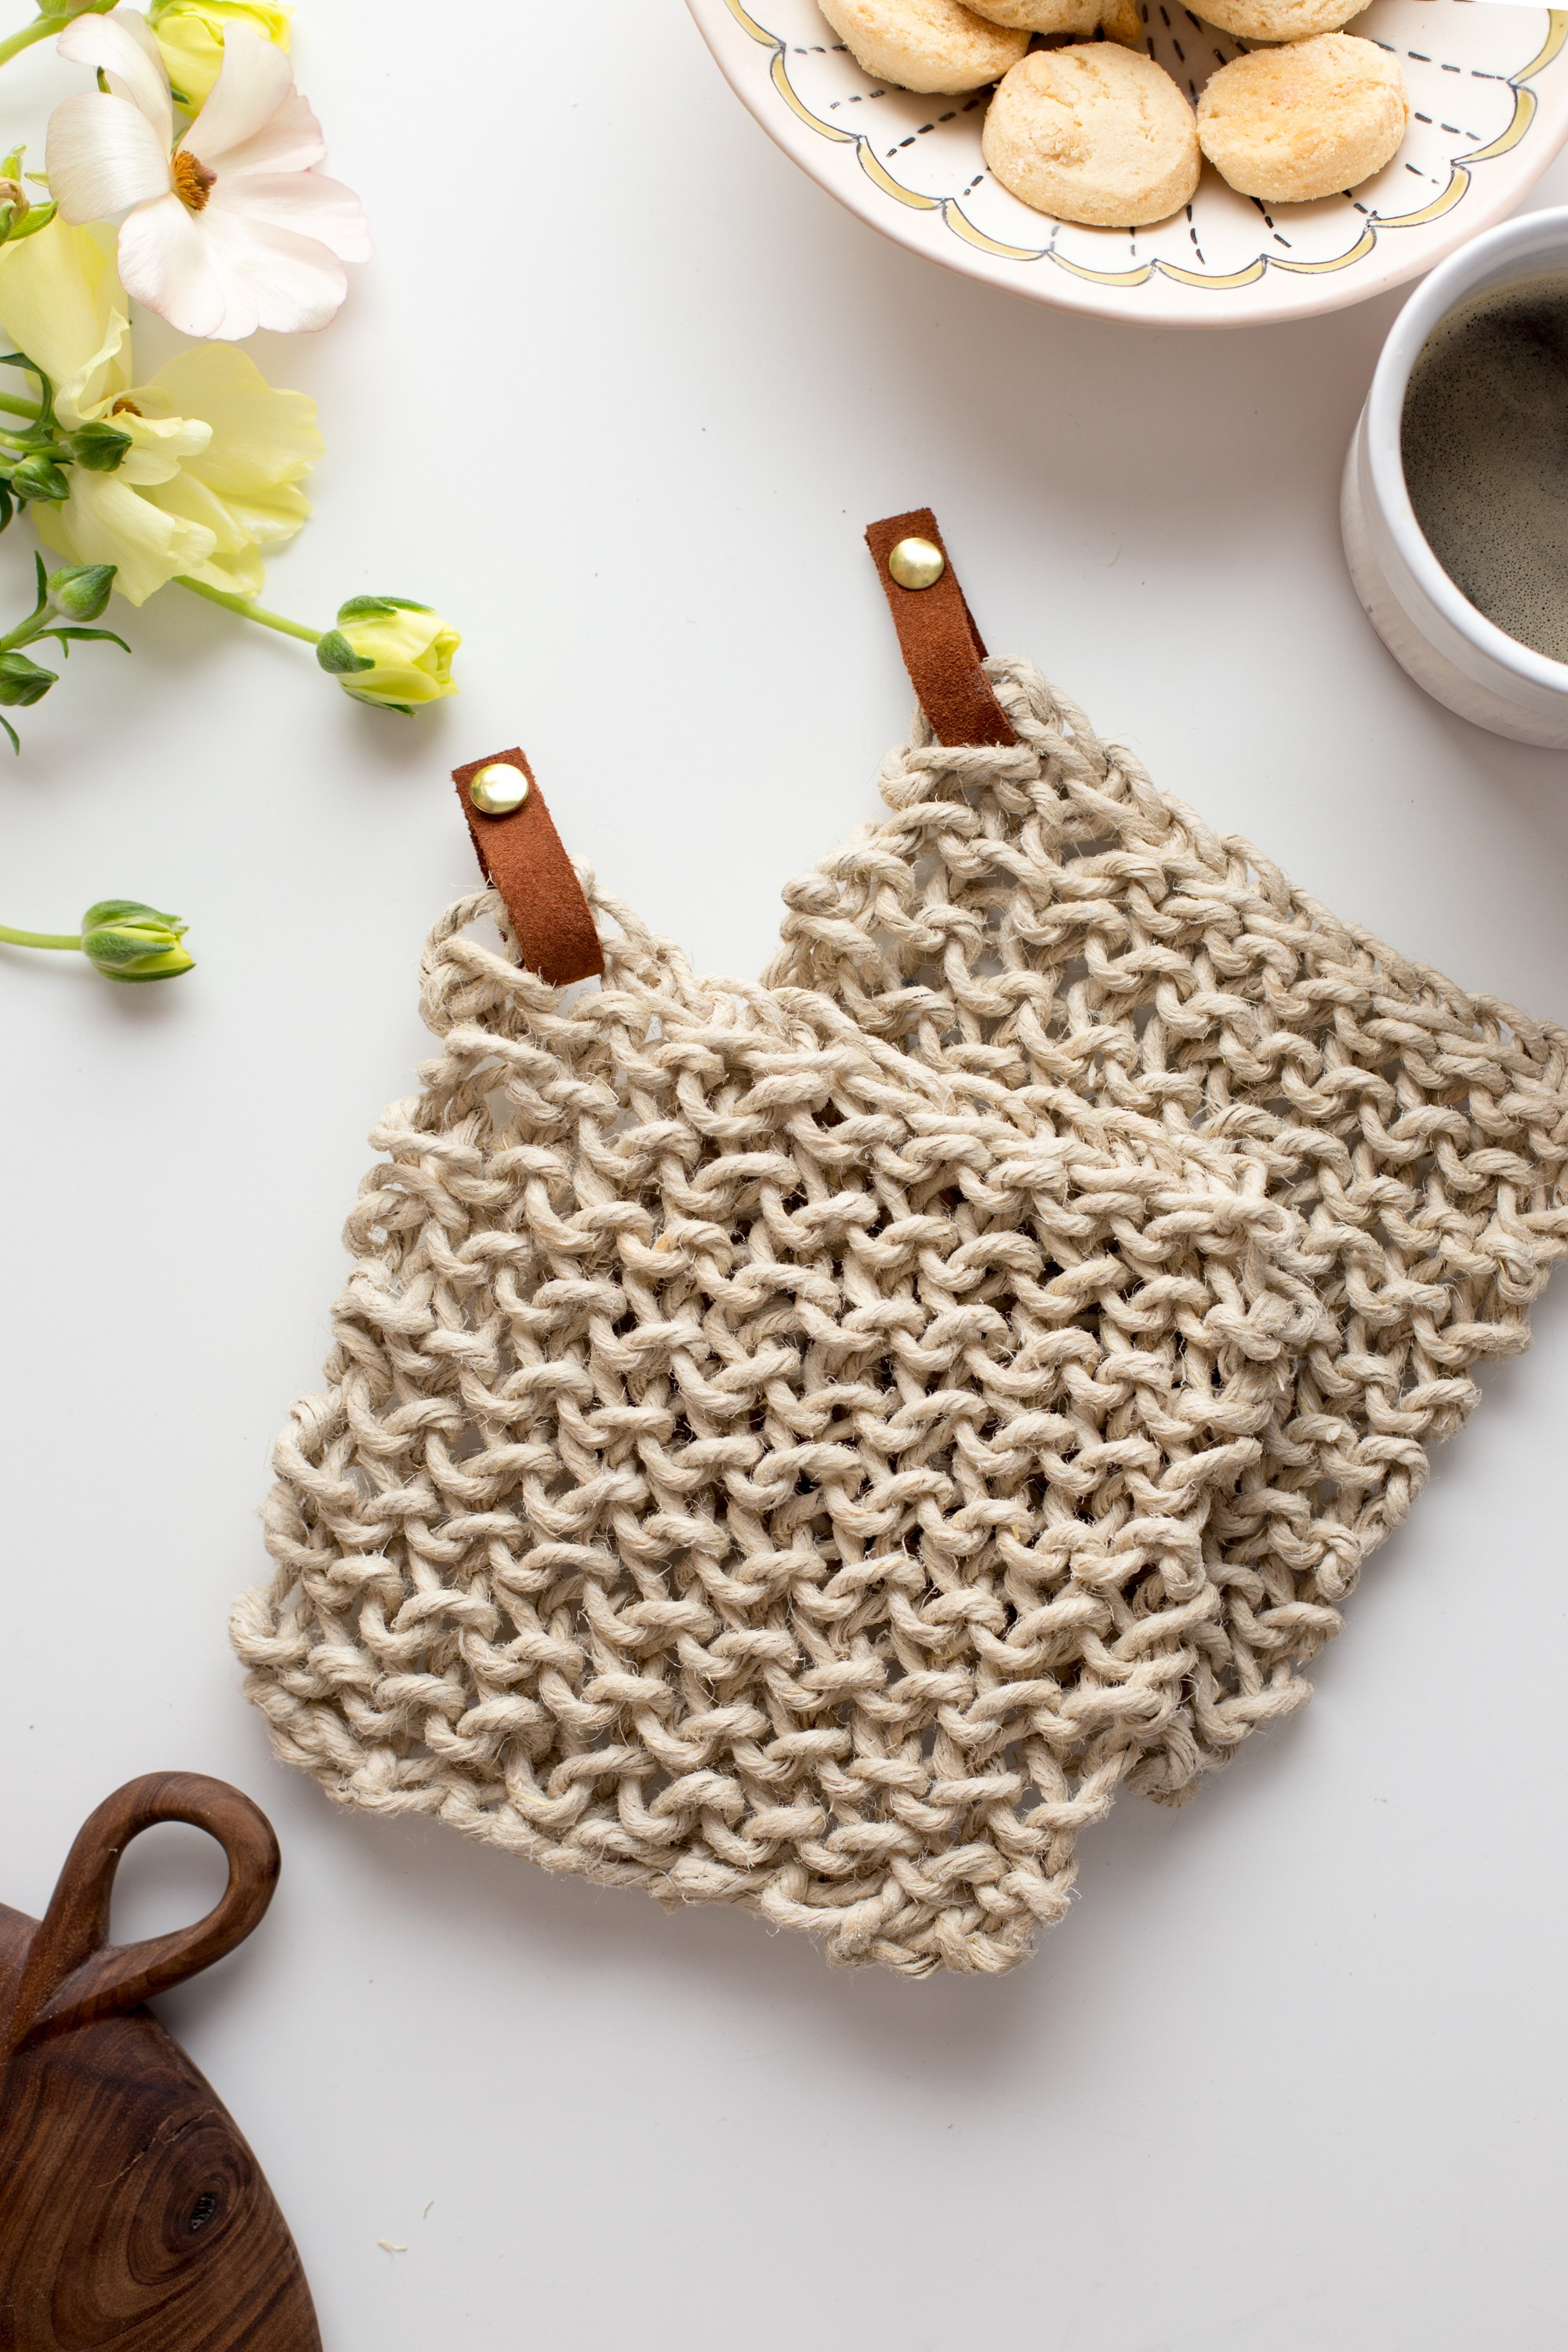 Knit Potholder Patterns Knit Twine Potholder Pattern With Leather Flax Twine